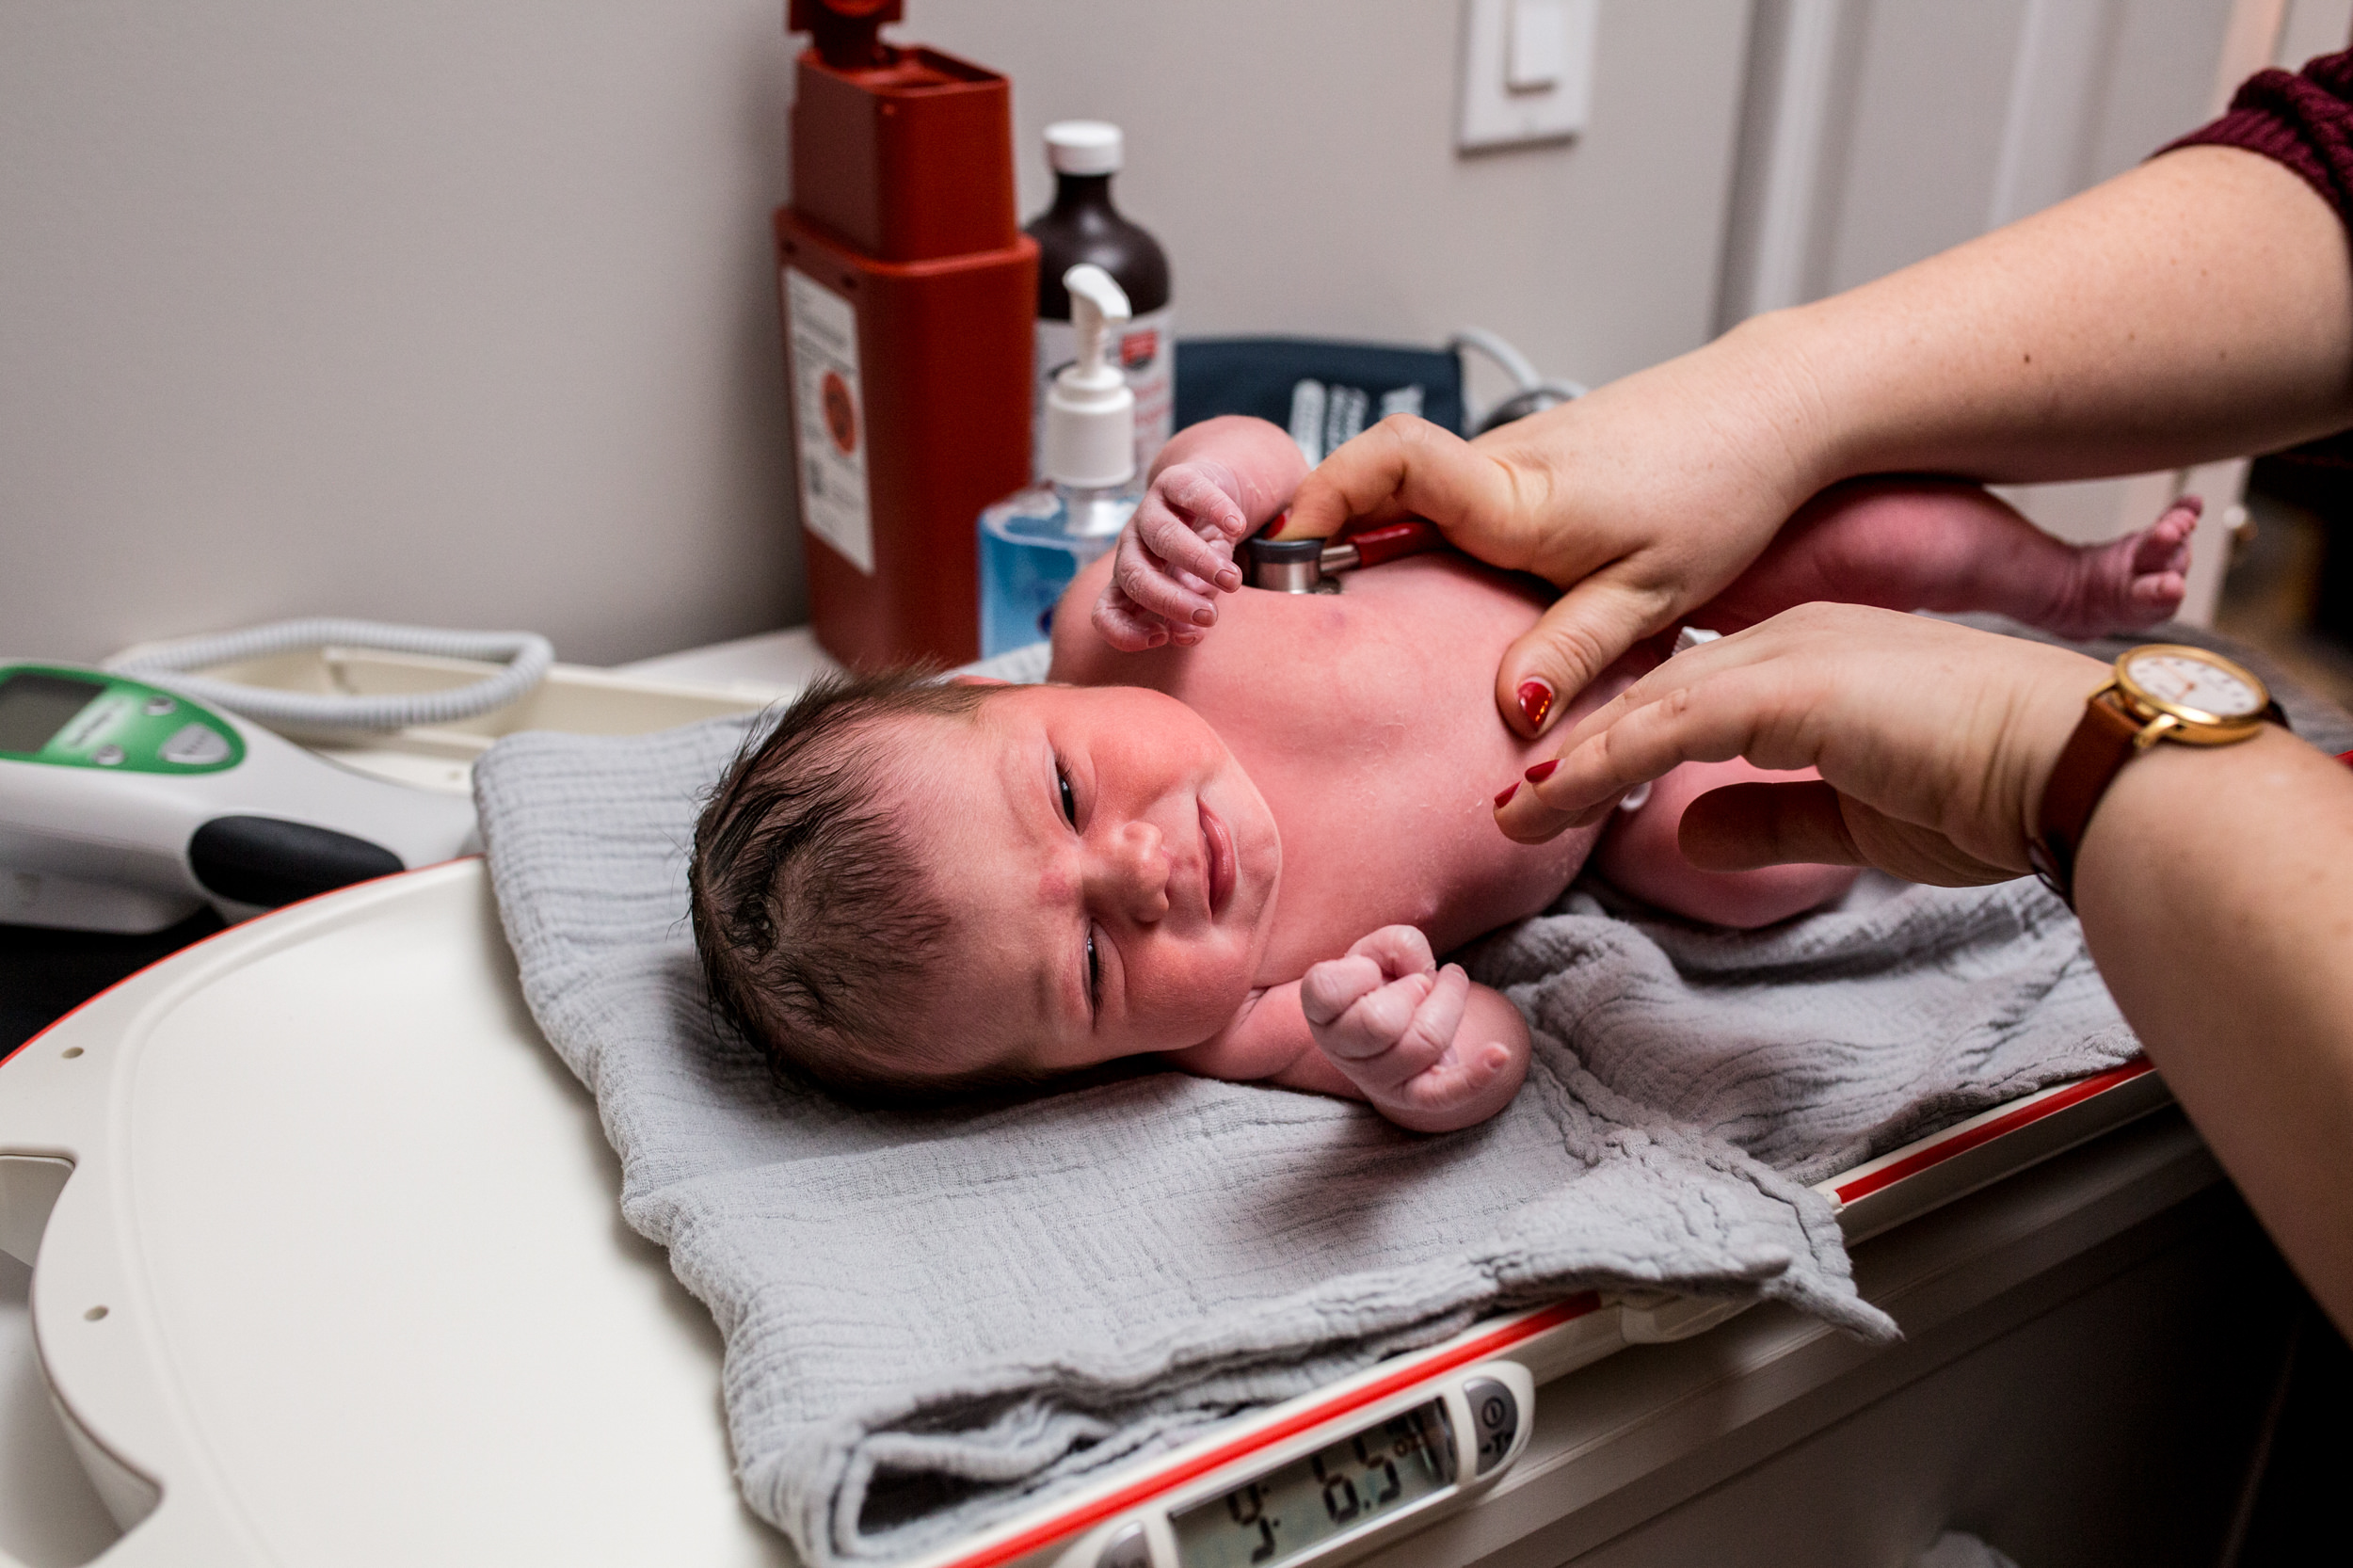 newborn exam after home birth